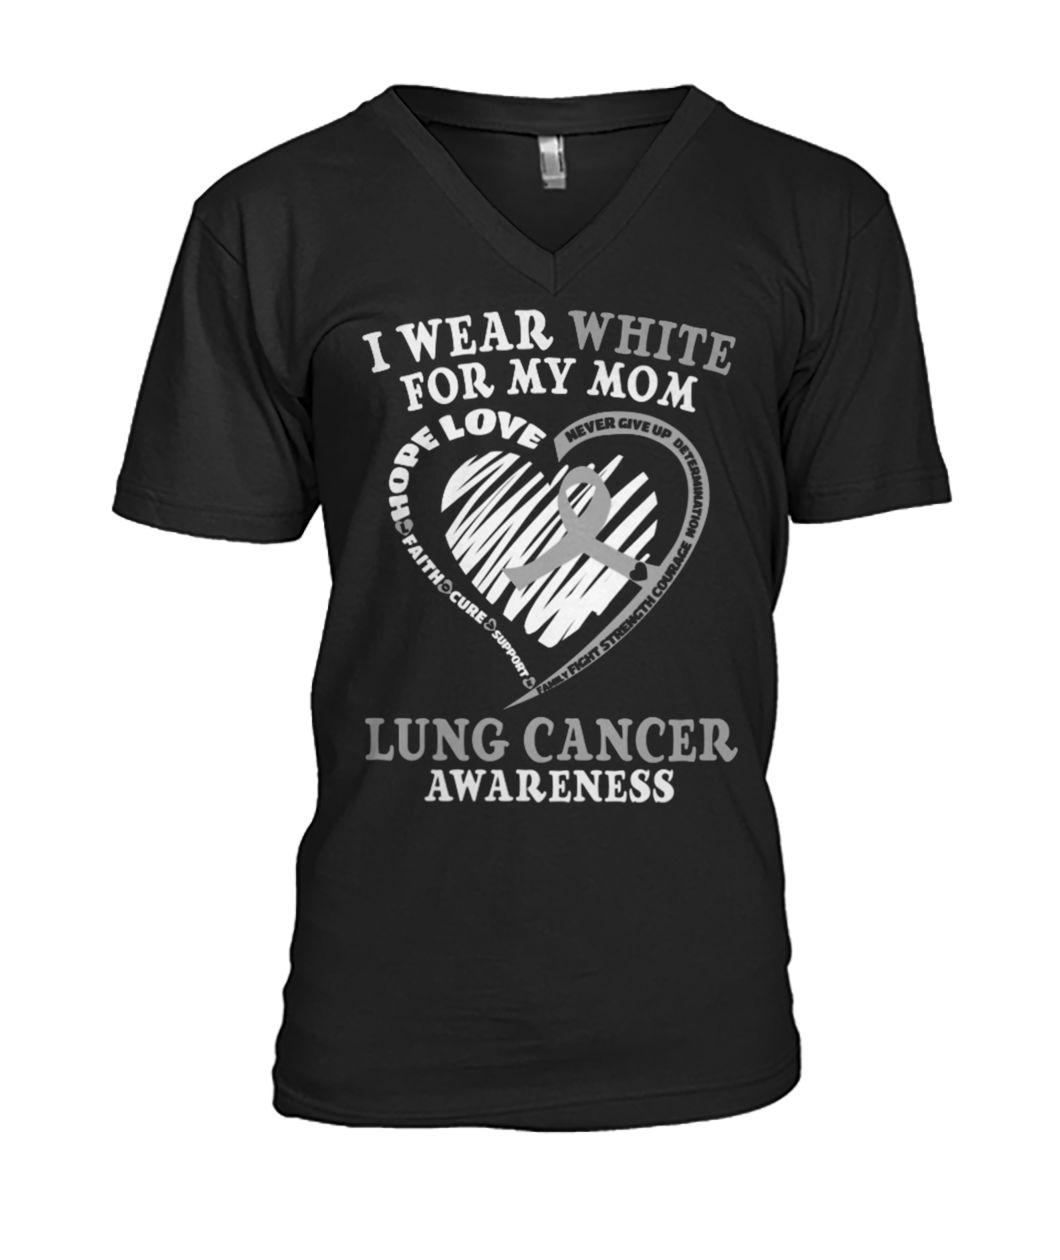 Lung cancer awareness I wear white for my mom men's v-neck